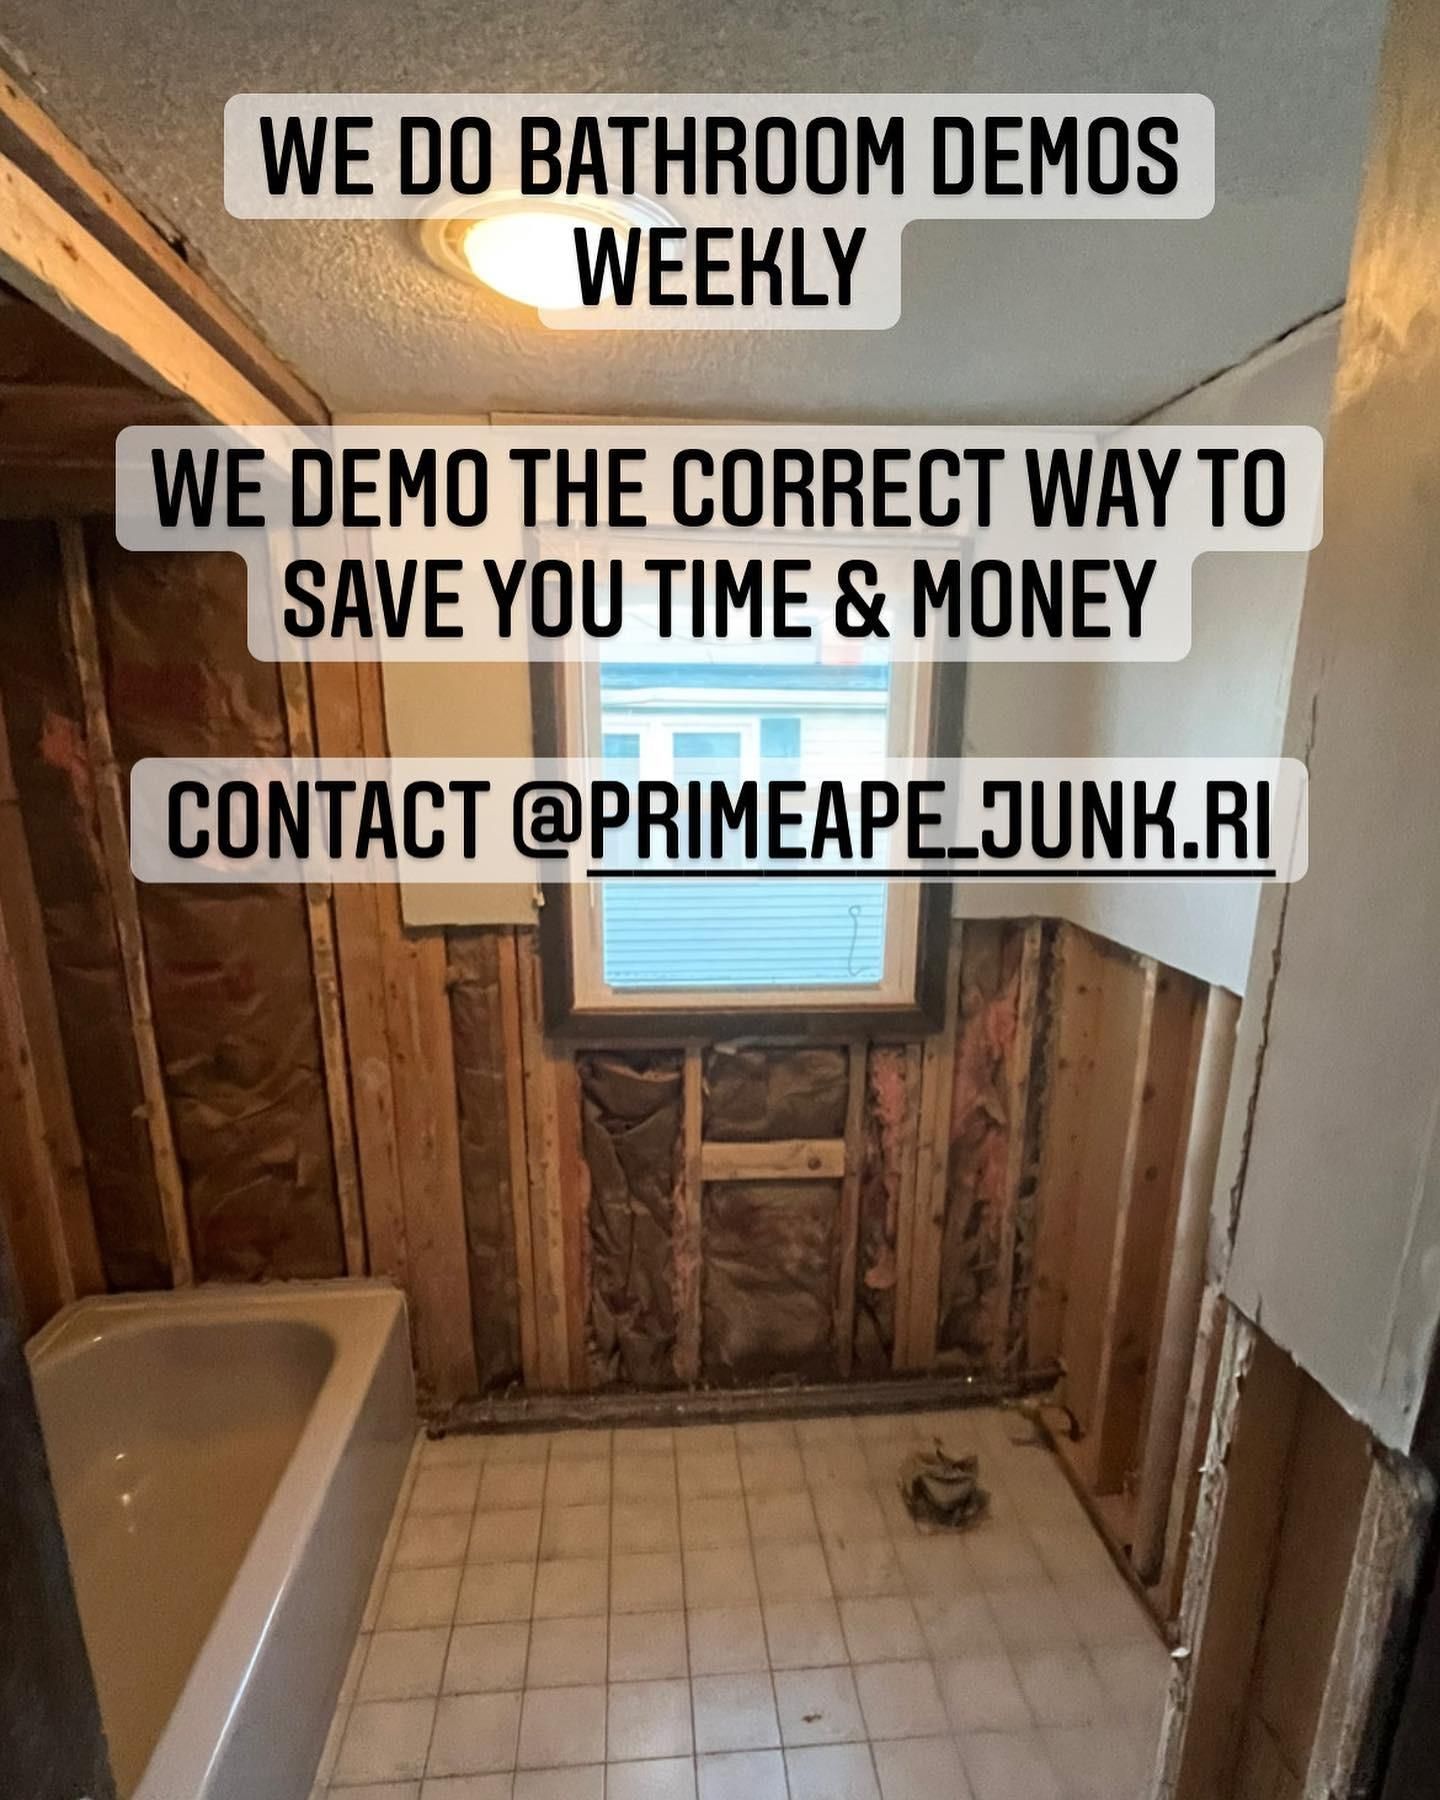 instagram for Prime Ape Junk Removal & Hauling in Warwick, RI